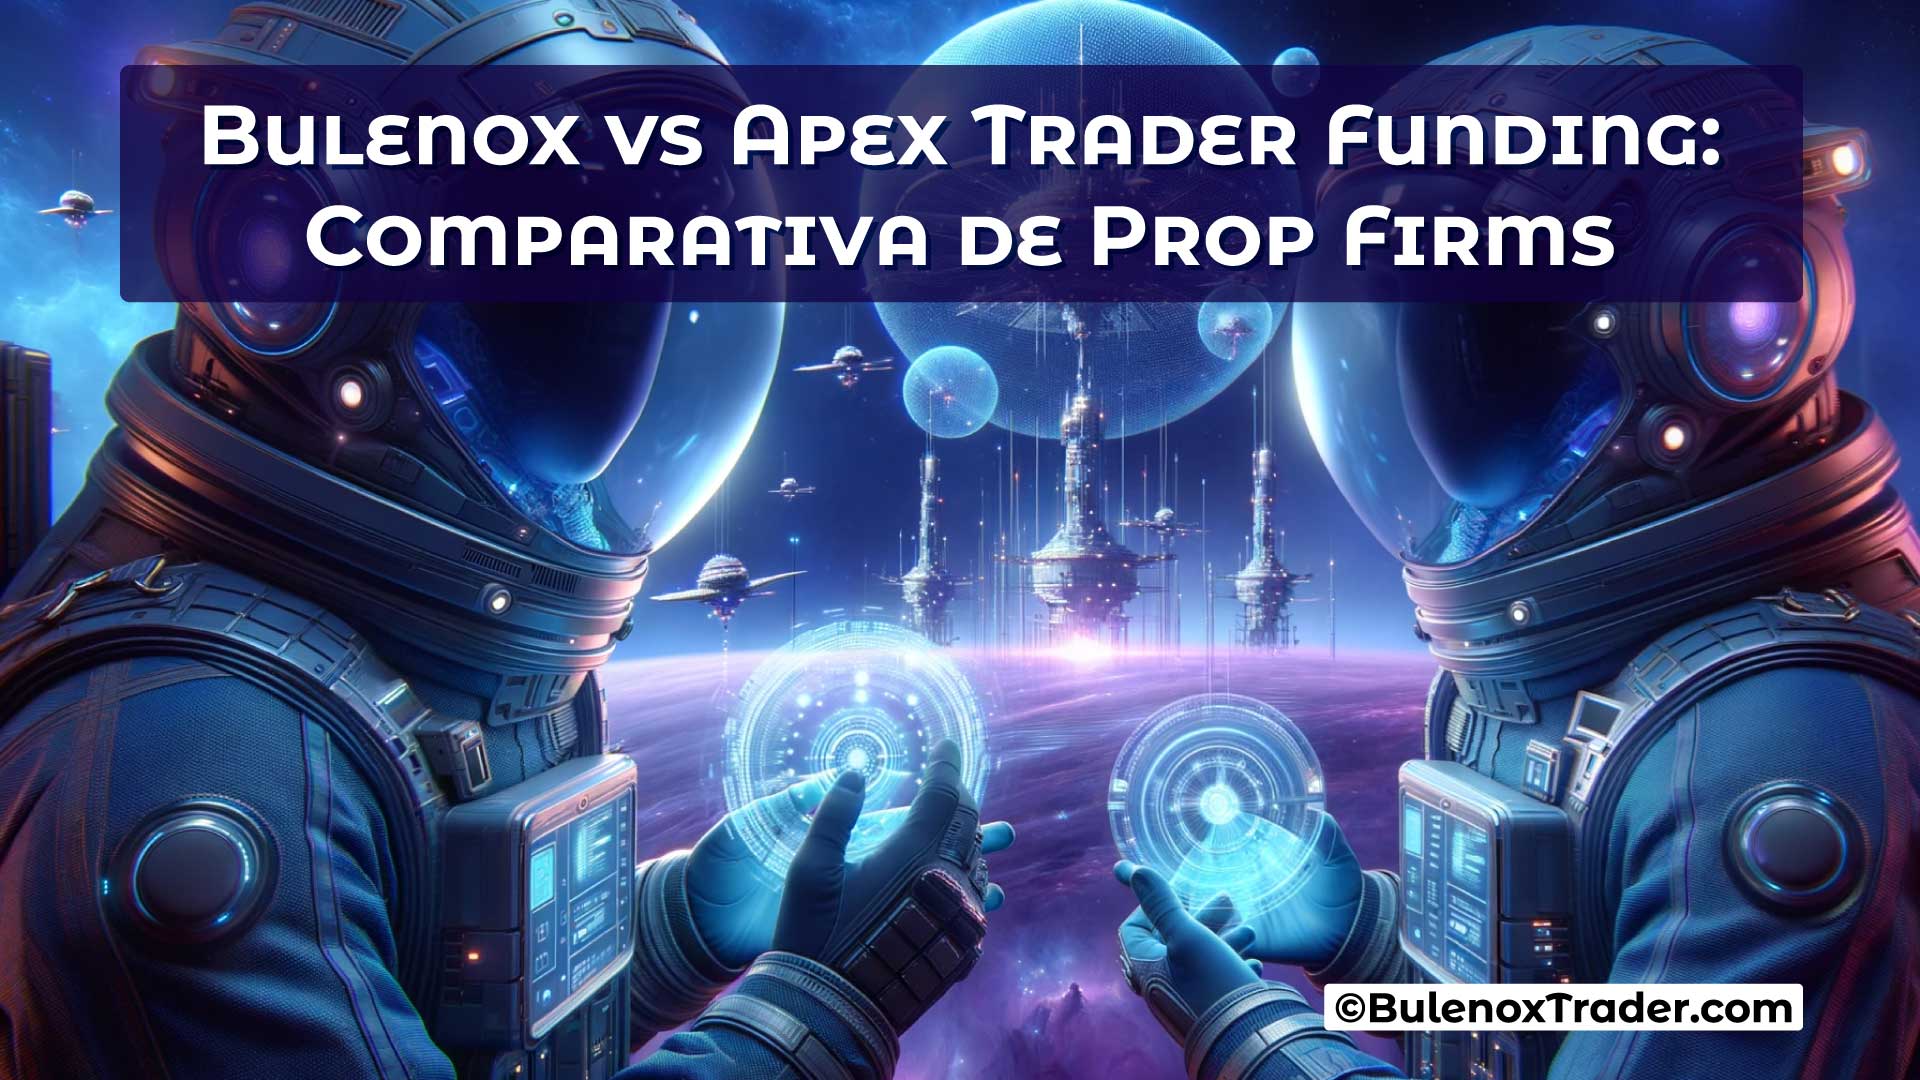 Bulenox-vs-Apex-Trader-Funding-Comparativa-de-Prop-Firms-on-Bulenox-Trader-Website